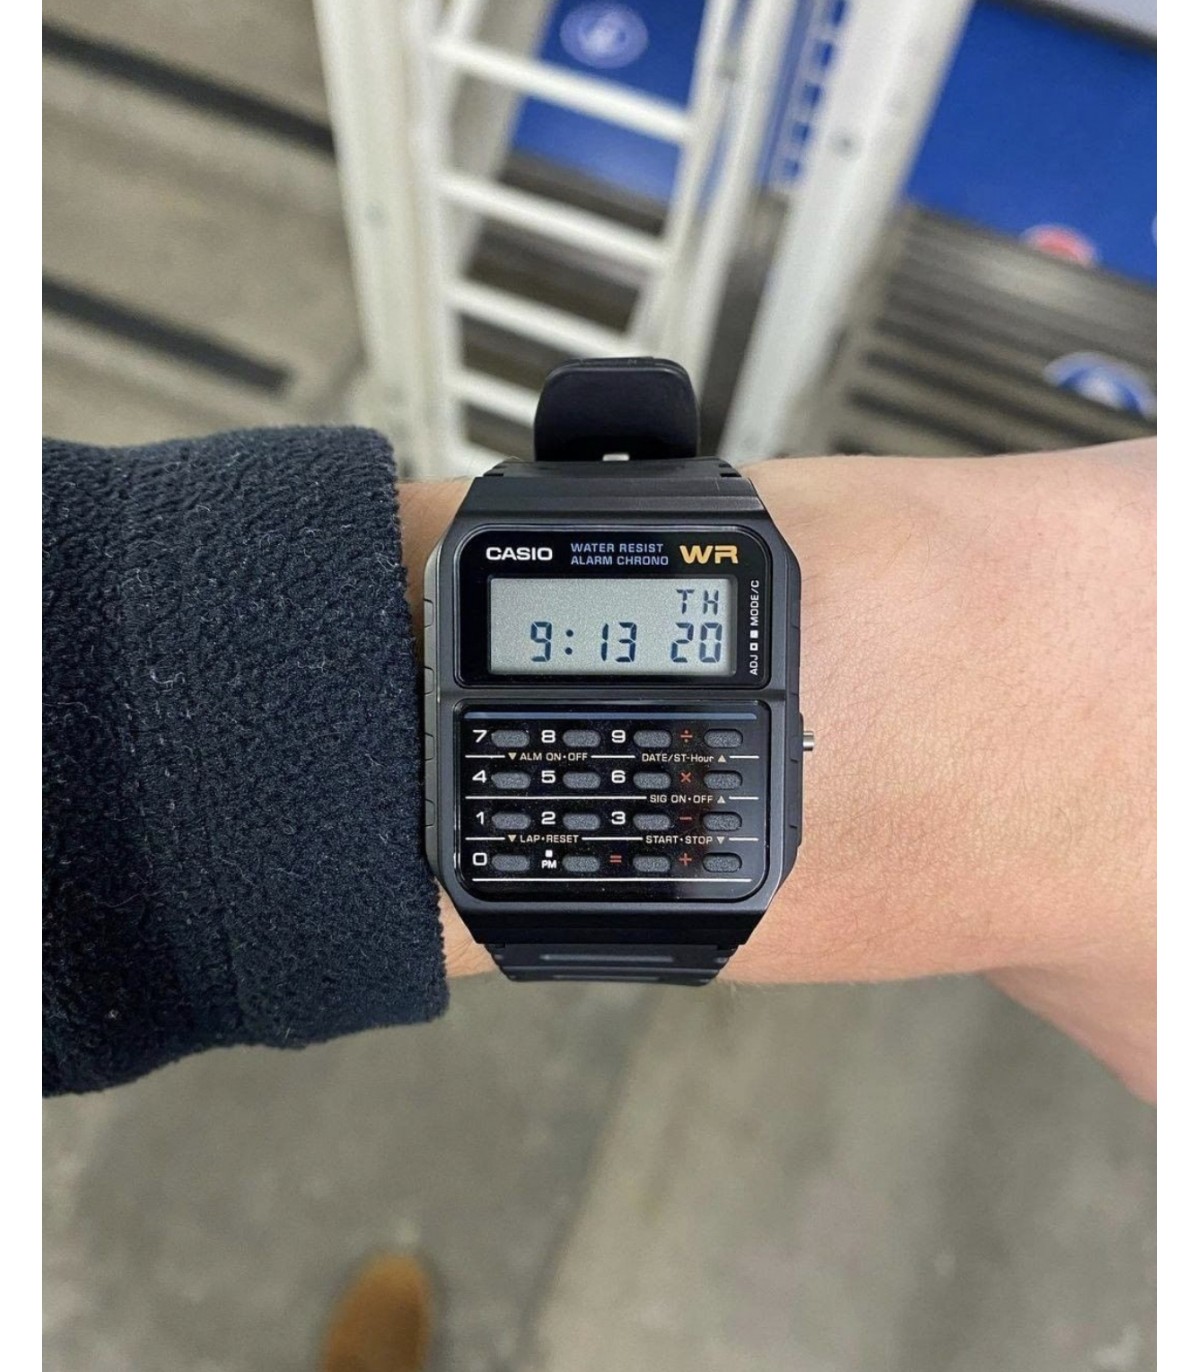 Casio CA53W reloj con calculadora, para hombre